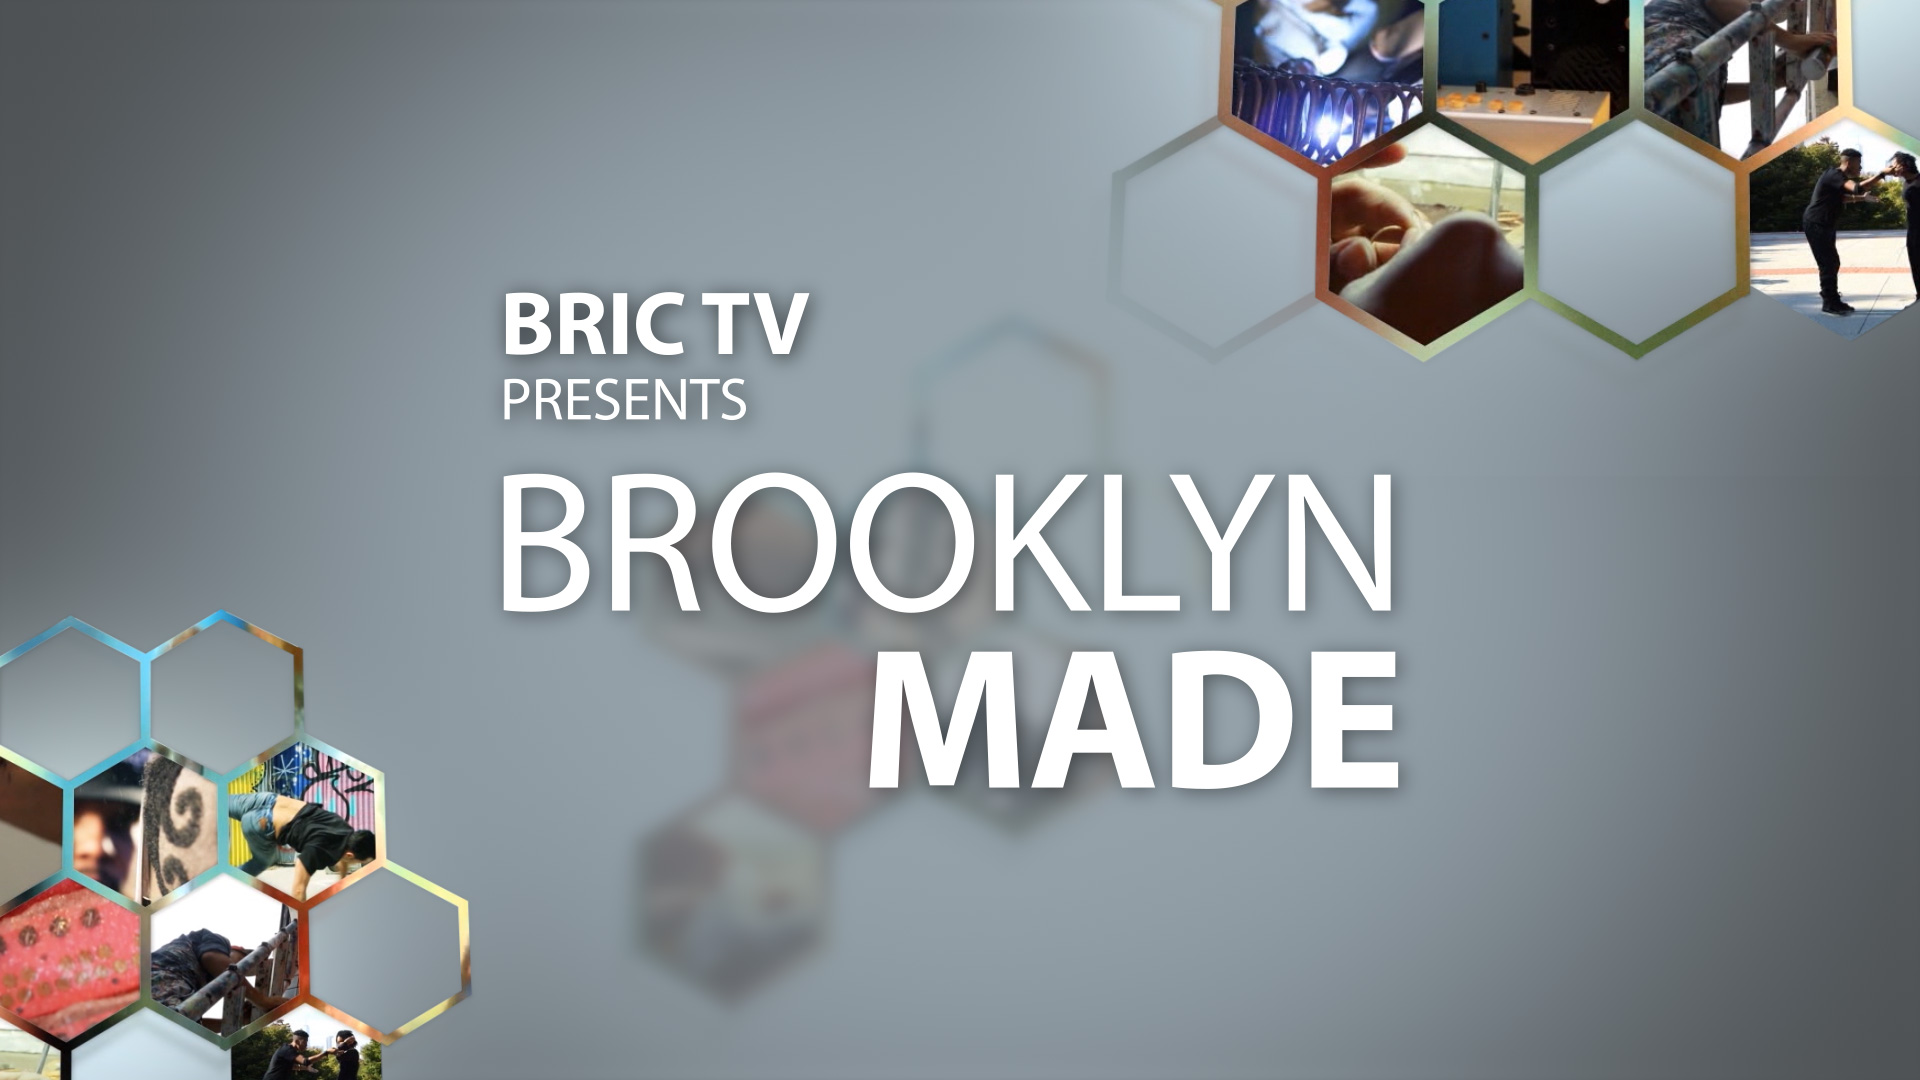 BRIC TV presents Brooklyn Made